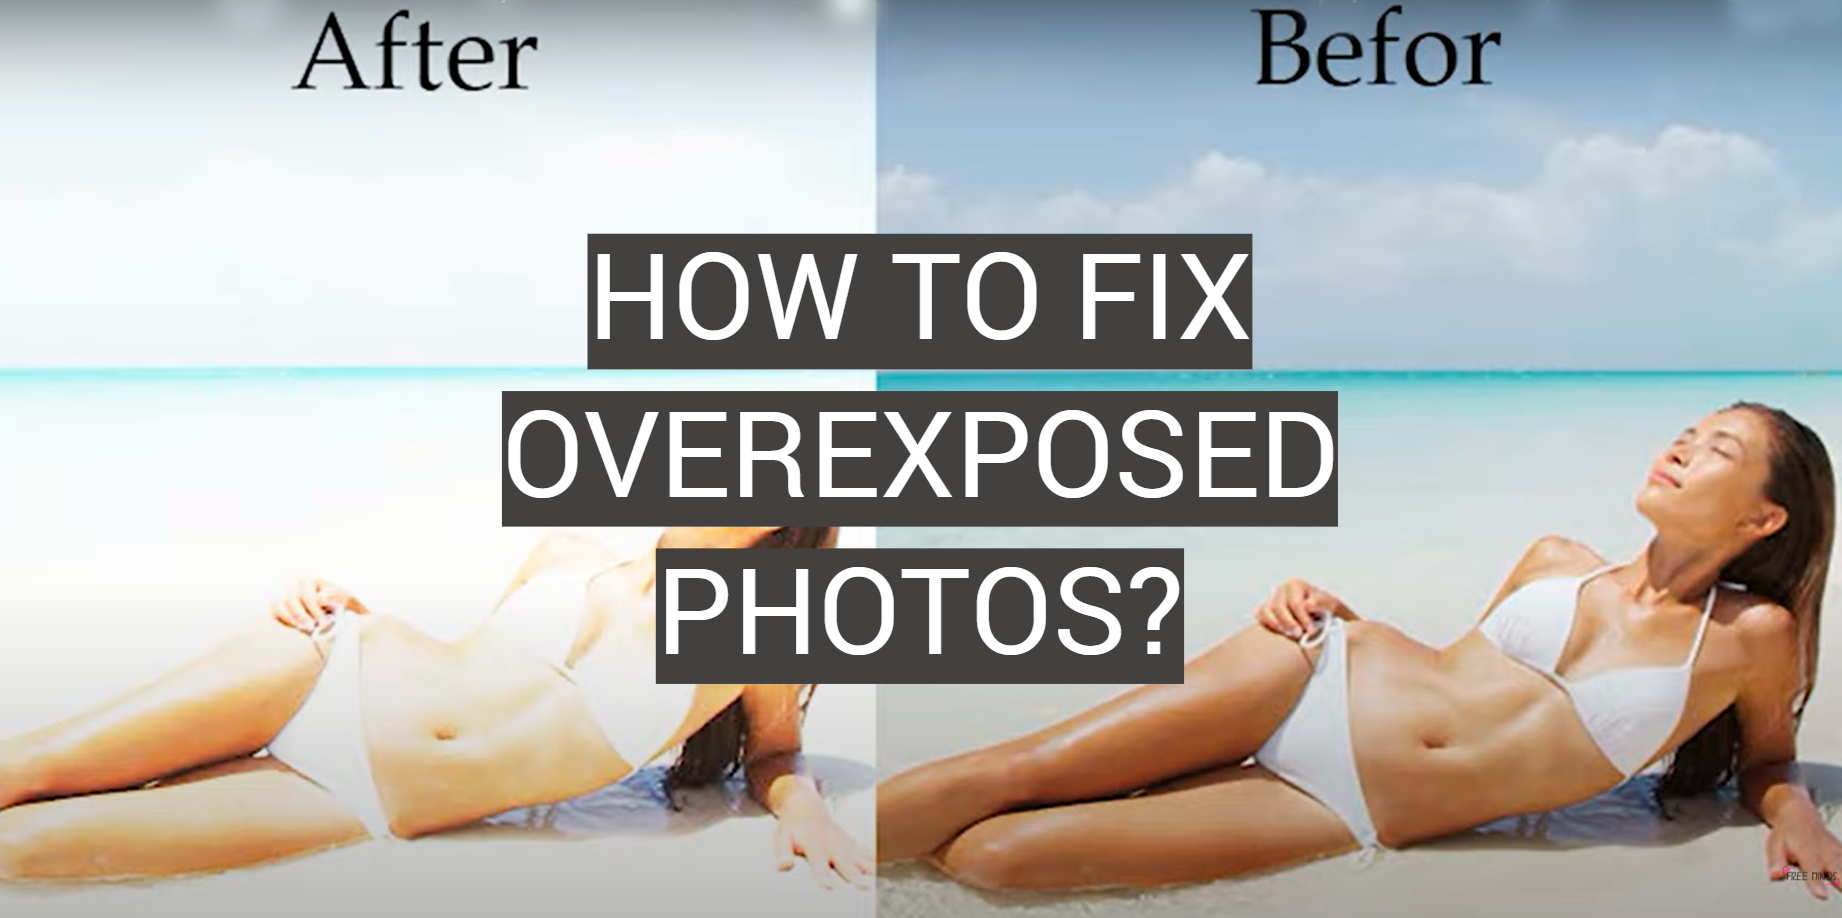 How to Fix Overexposed Photos?